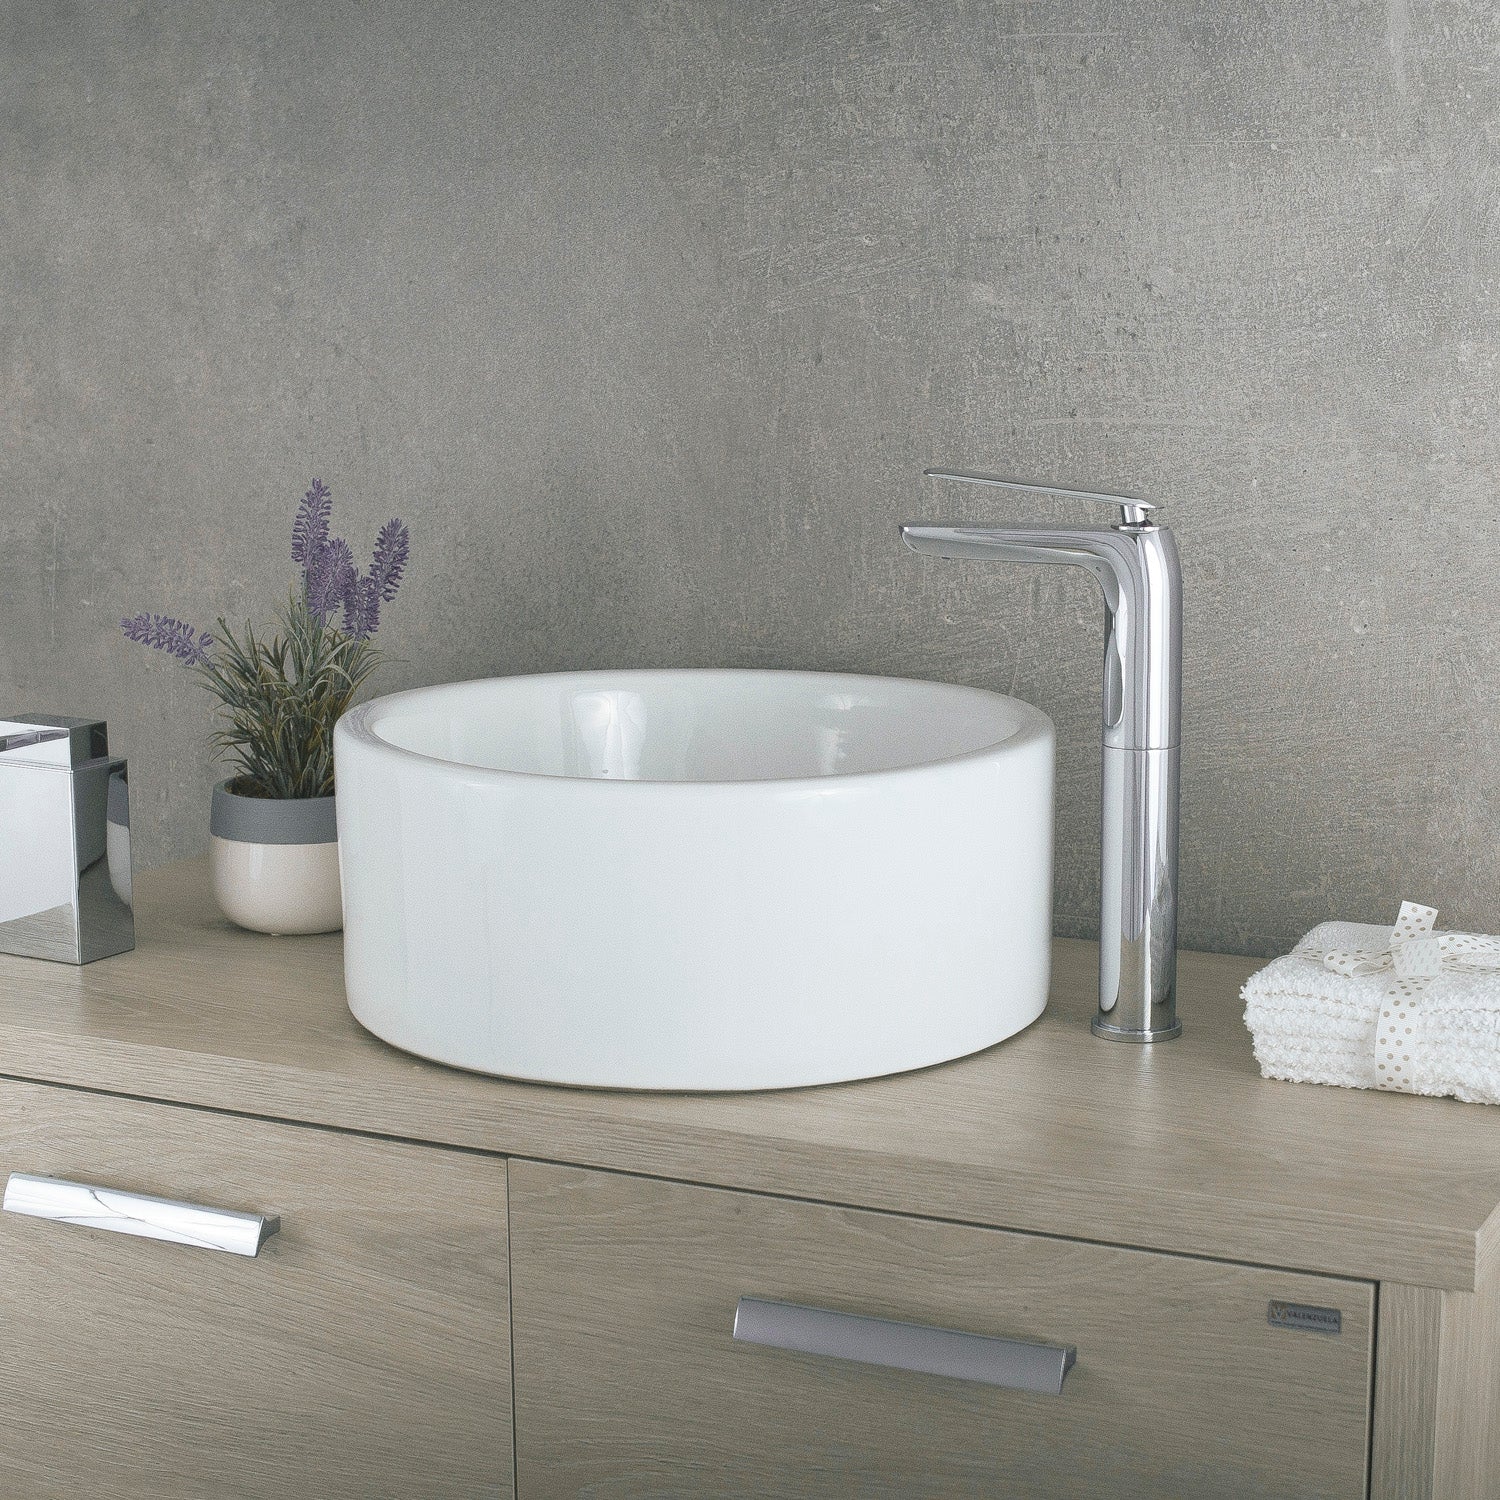 DAX Single Handle Vessel Sink Bathroom Faucet, Brass Body, Chrome Finish, 4-3/4 x 12-3/8 Inches (DAX-8206B)